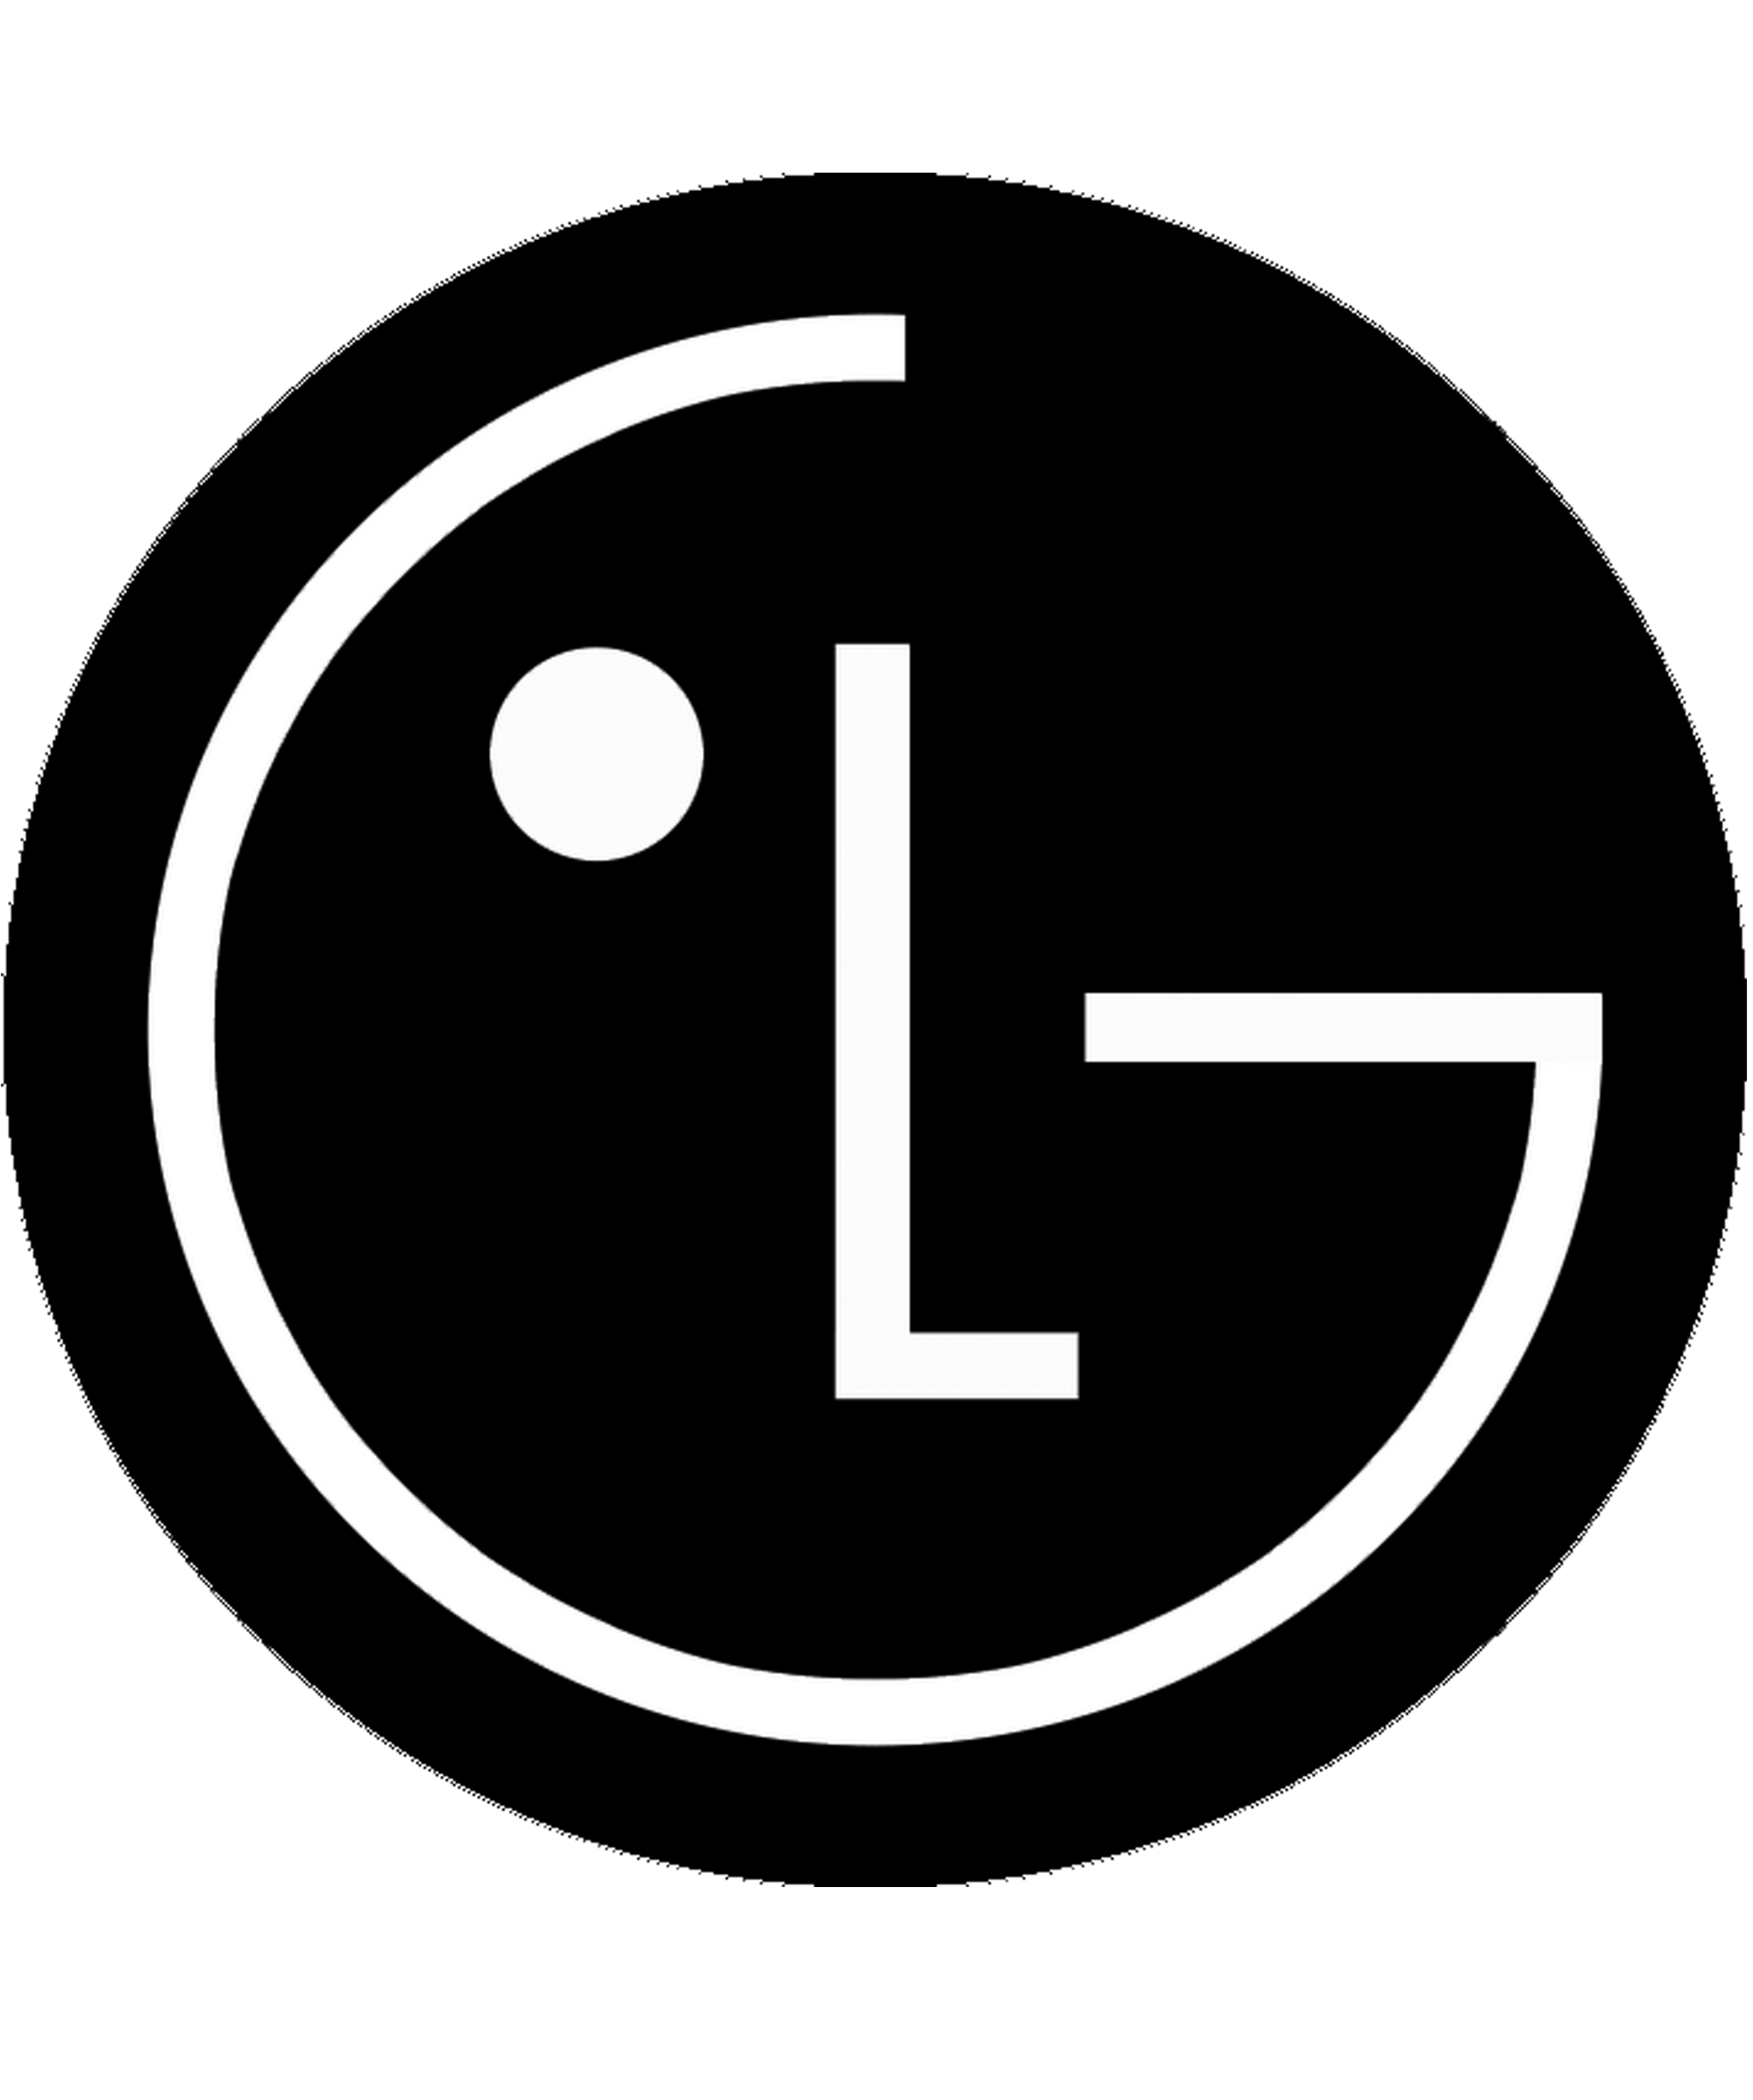 LG logo PNG images free download.